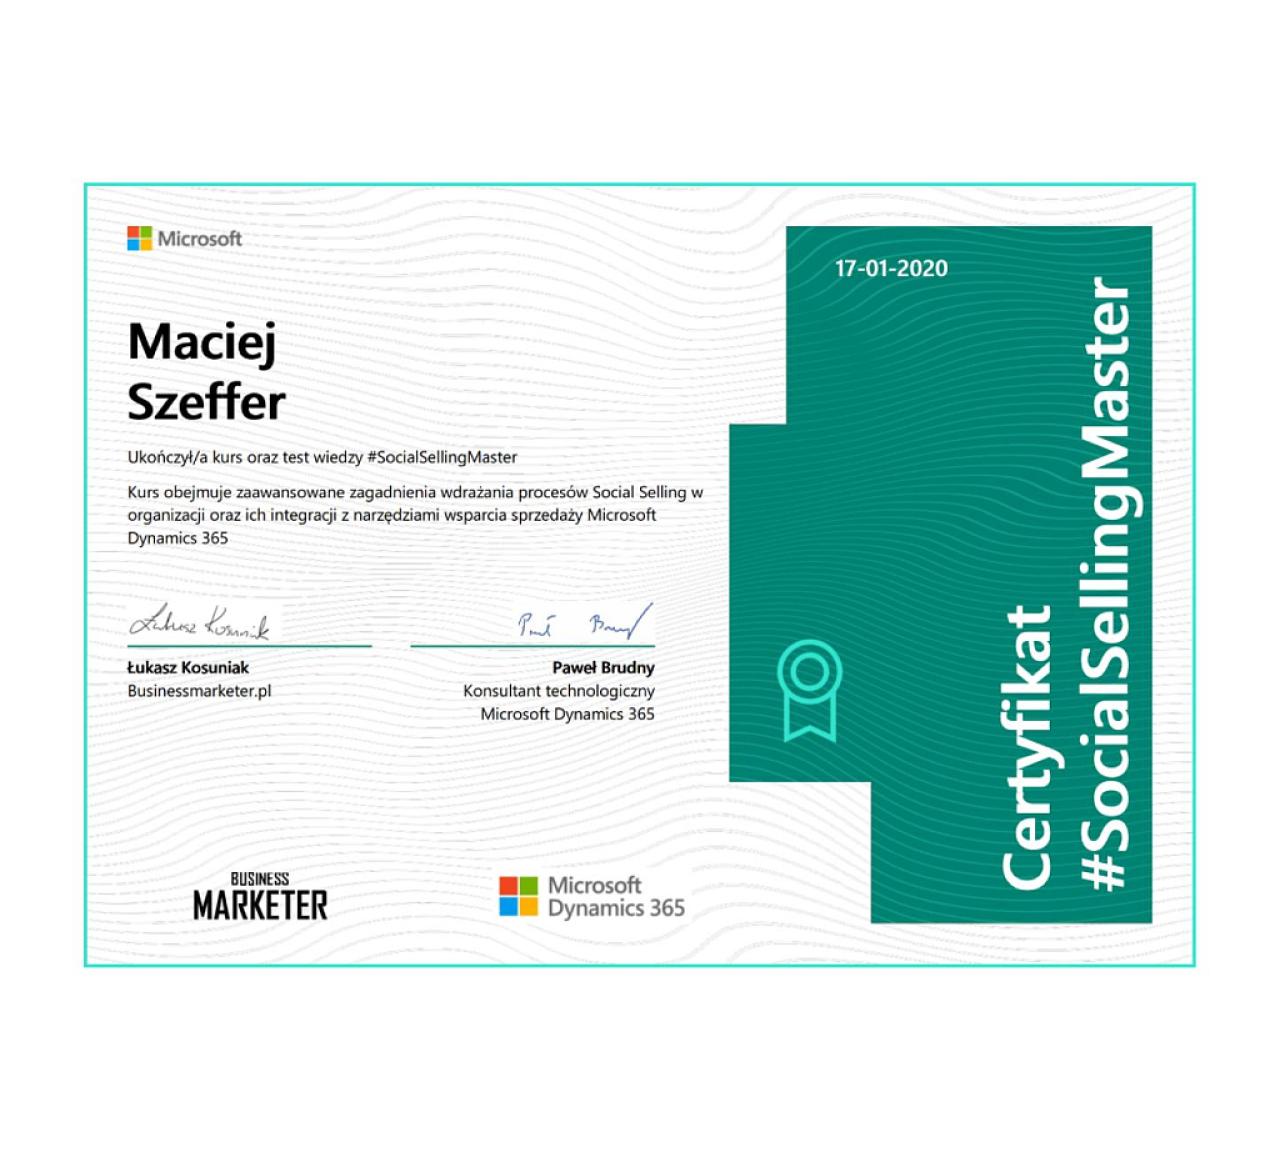 Maciej Szeffer - kurs online Social Selling - certyfikat Microsoft SocialSellingMaster